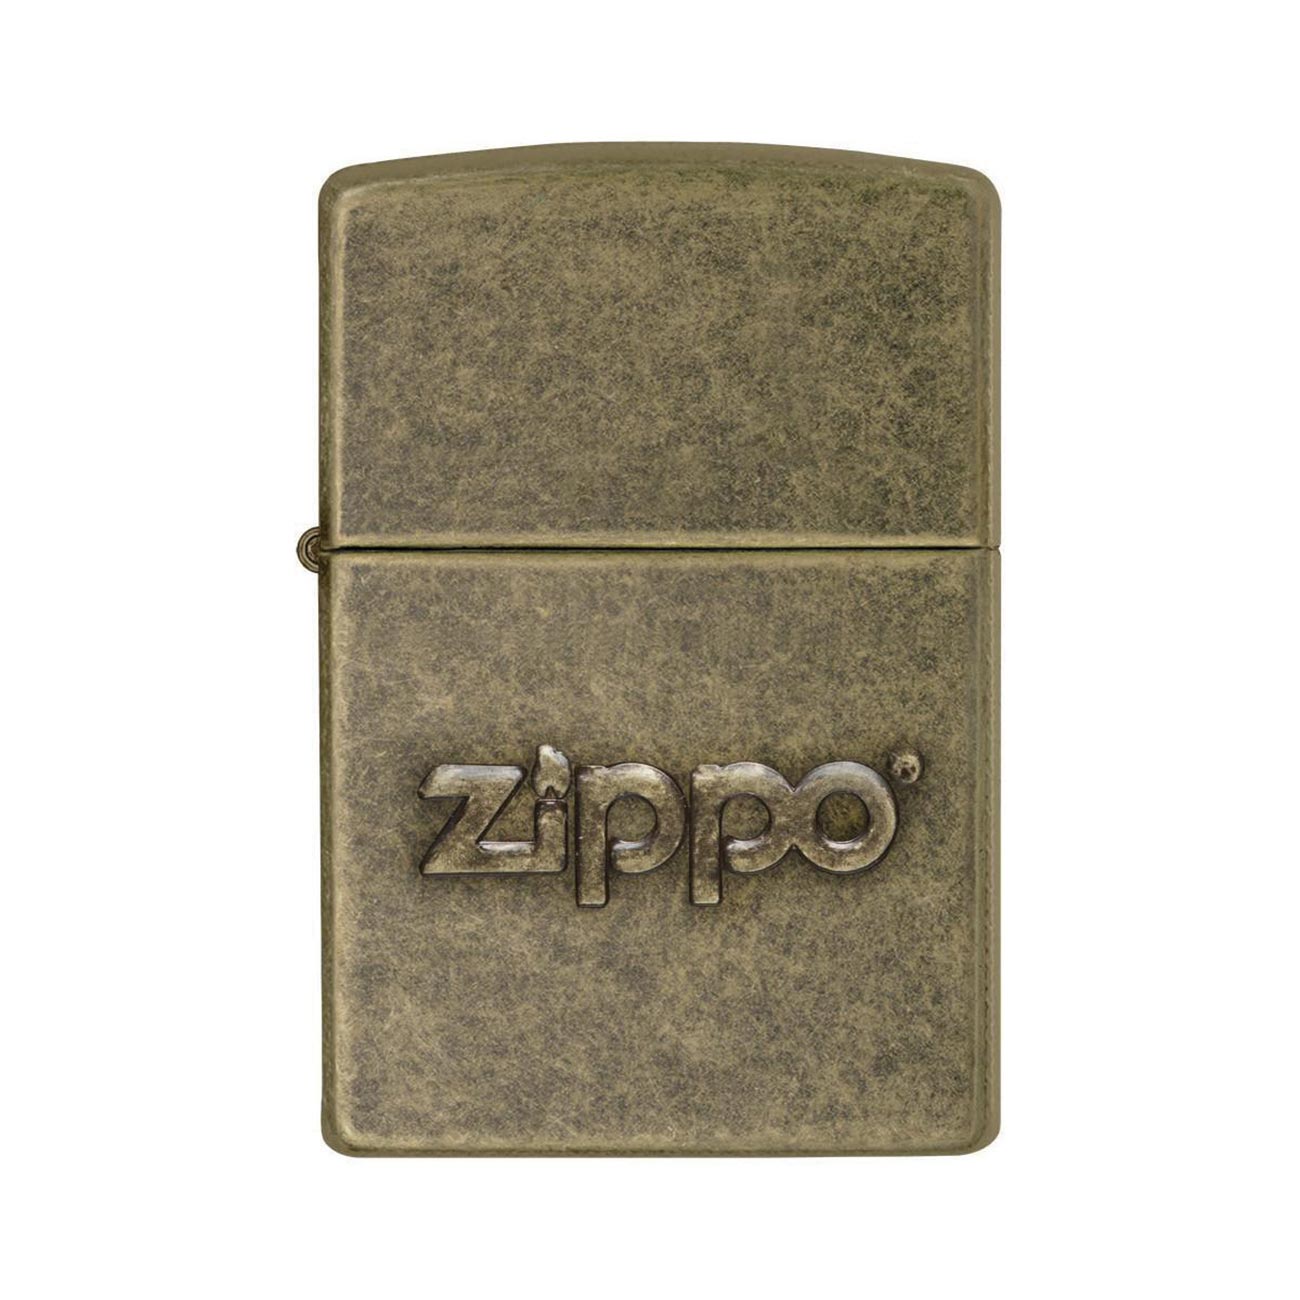 Zippo Windproof Lighter Zippo Logo Antique Stamp Antique Brass Finish